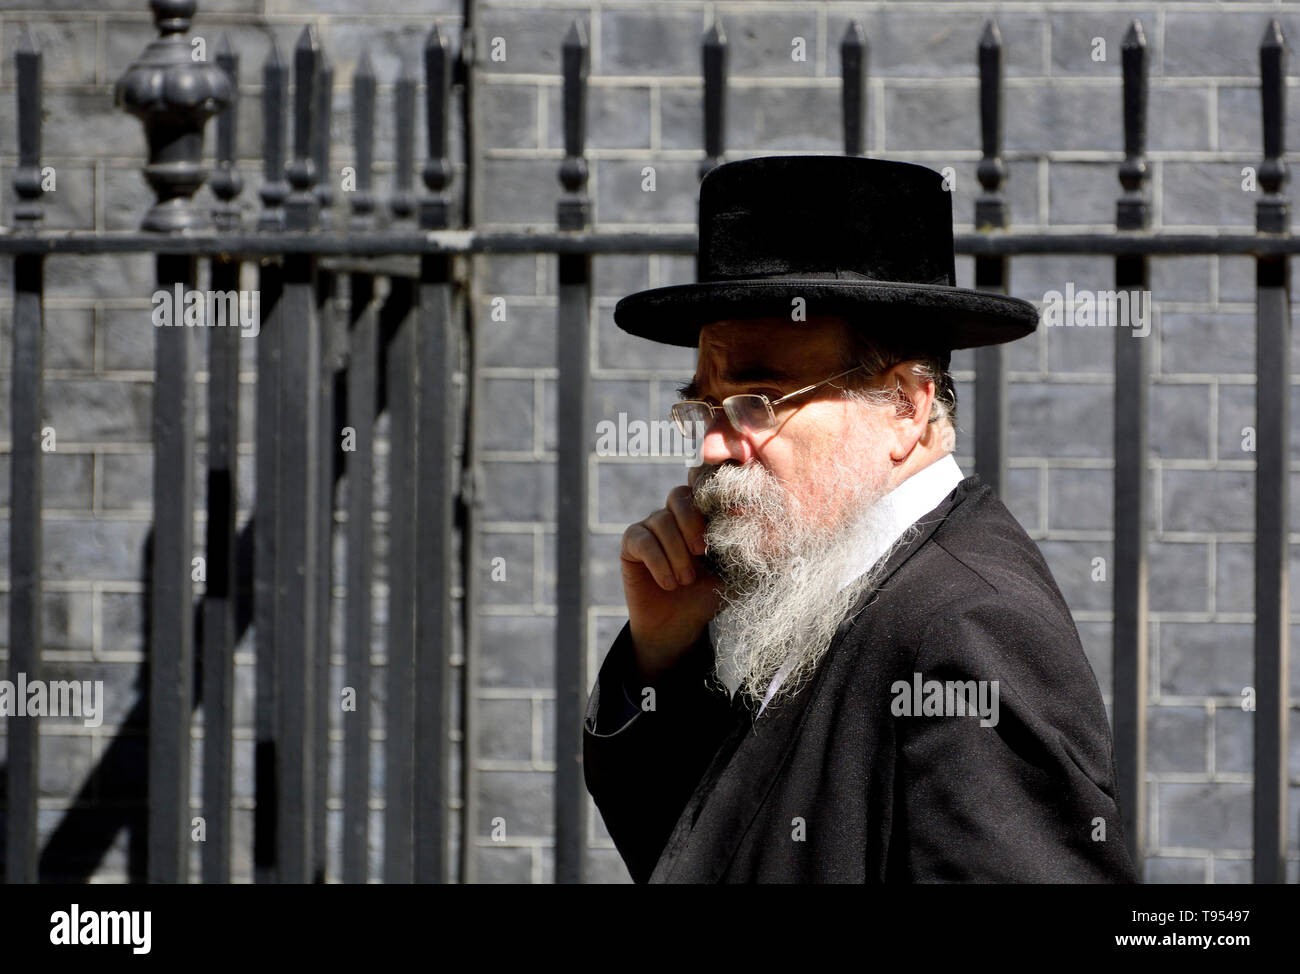 London, England, UK. Abraham Pinter - Haredi rabbi/politician from Stamford Hill,  represents Haredi interests on the London Jewish Forum. On his mobi Stock Photo